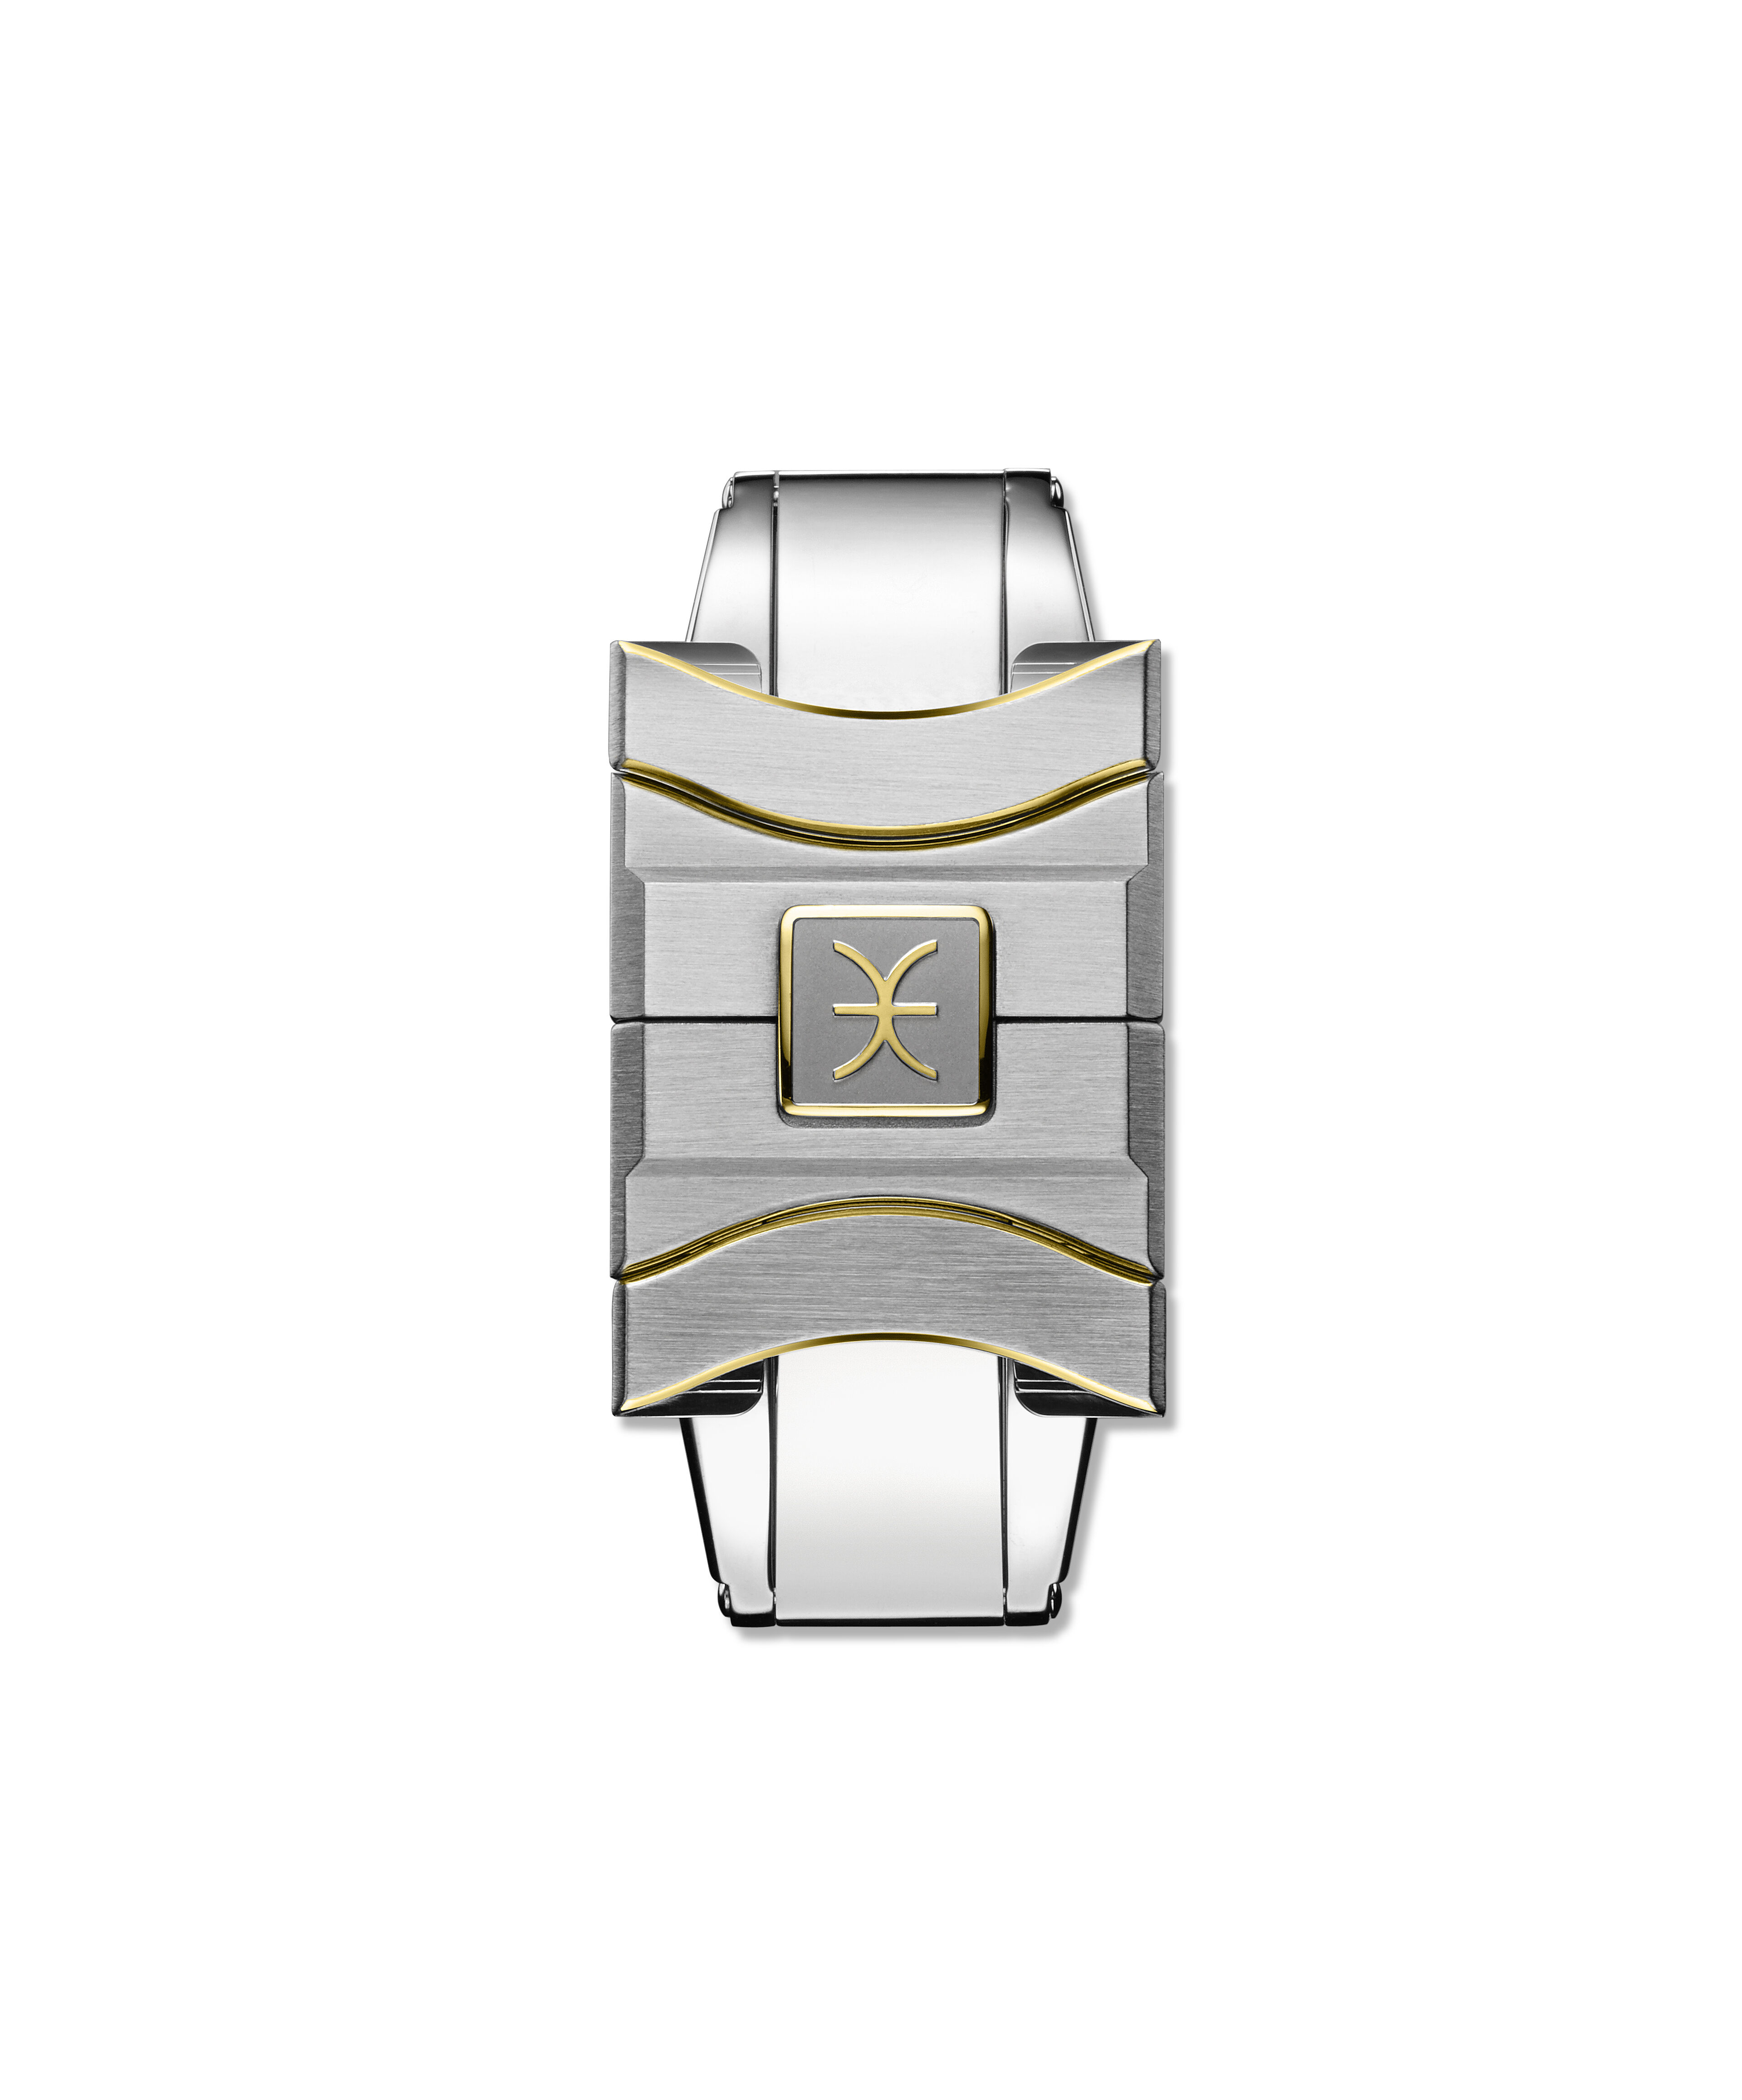 Breitling Watch Replica